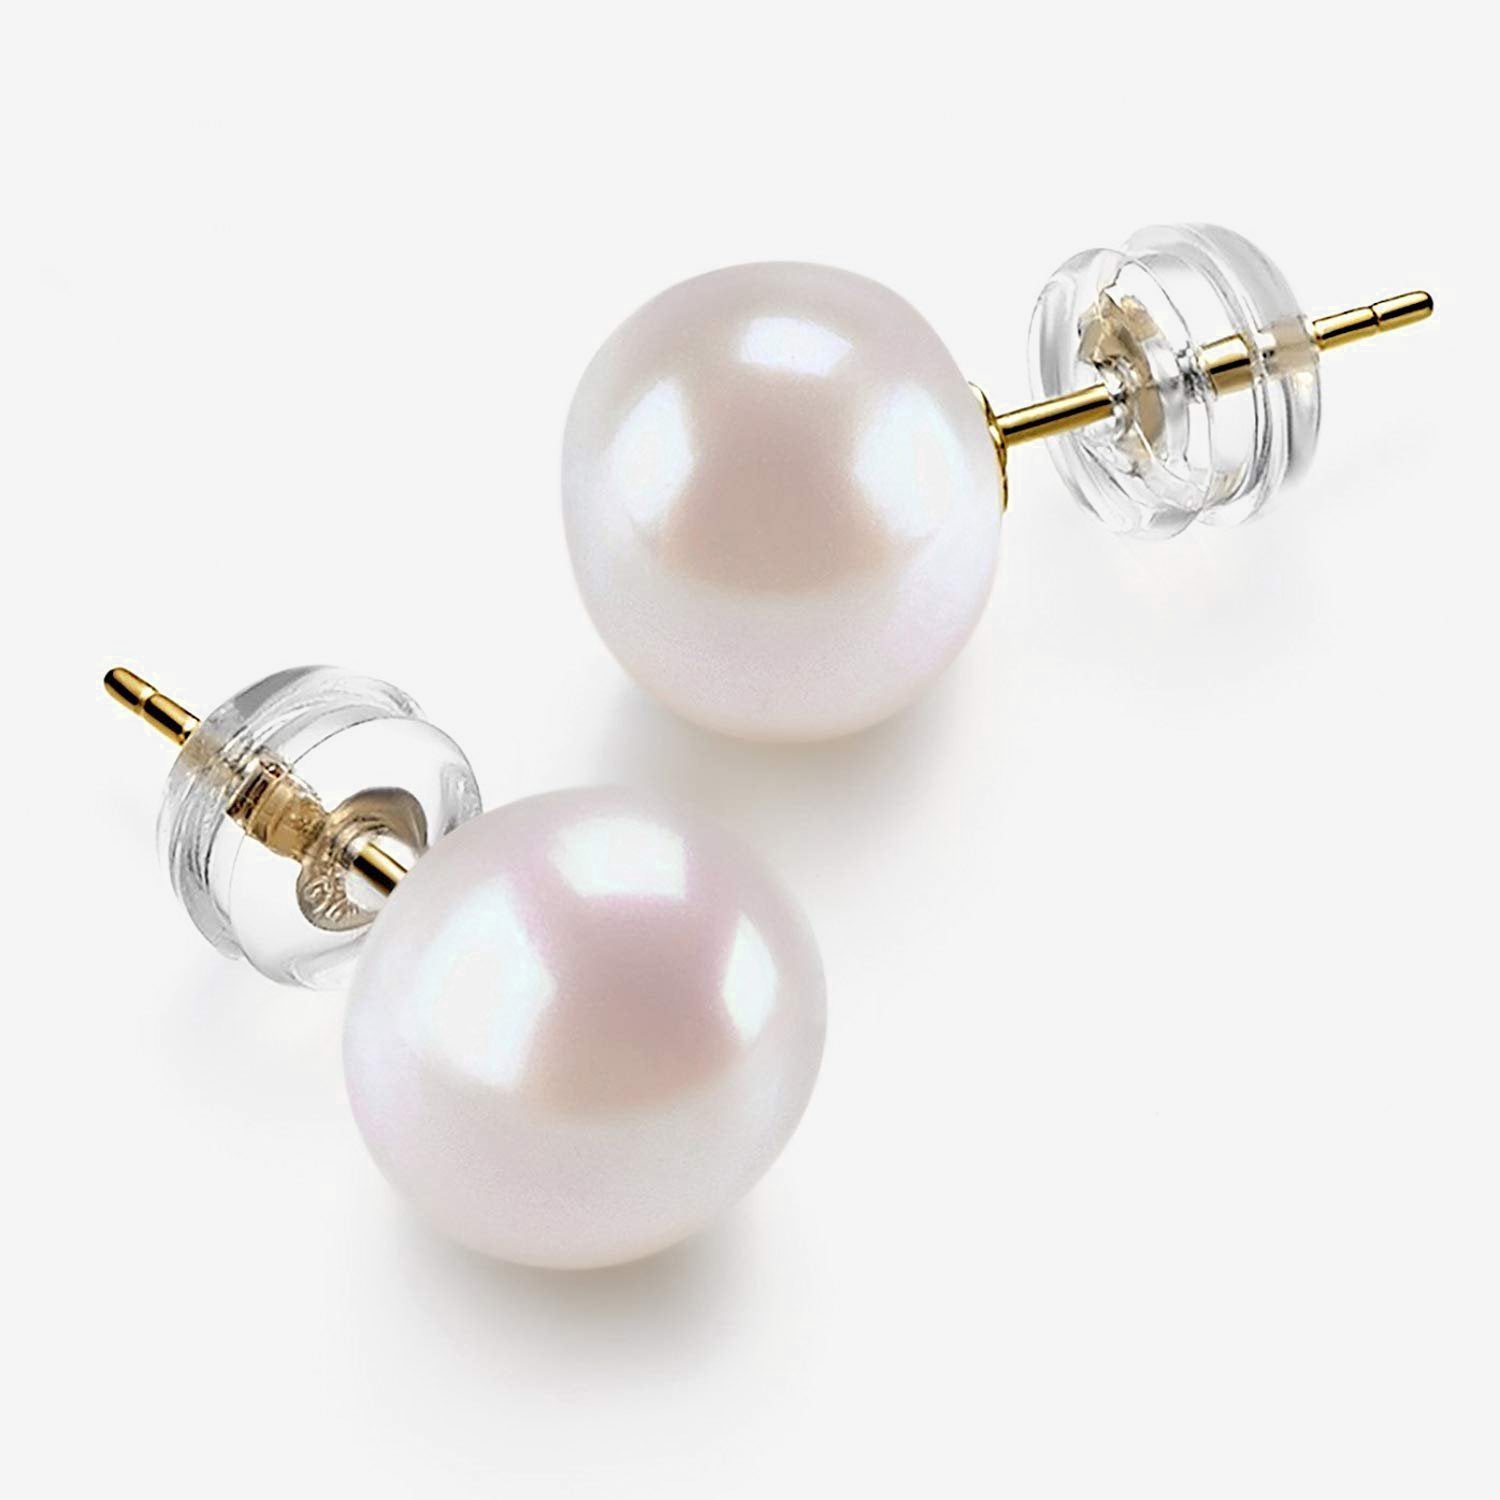 9mm White Freshwater Round Pearl Stud Earrings